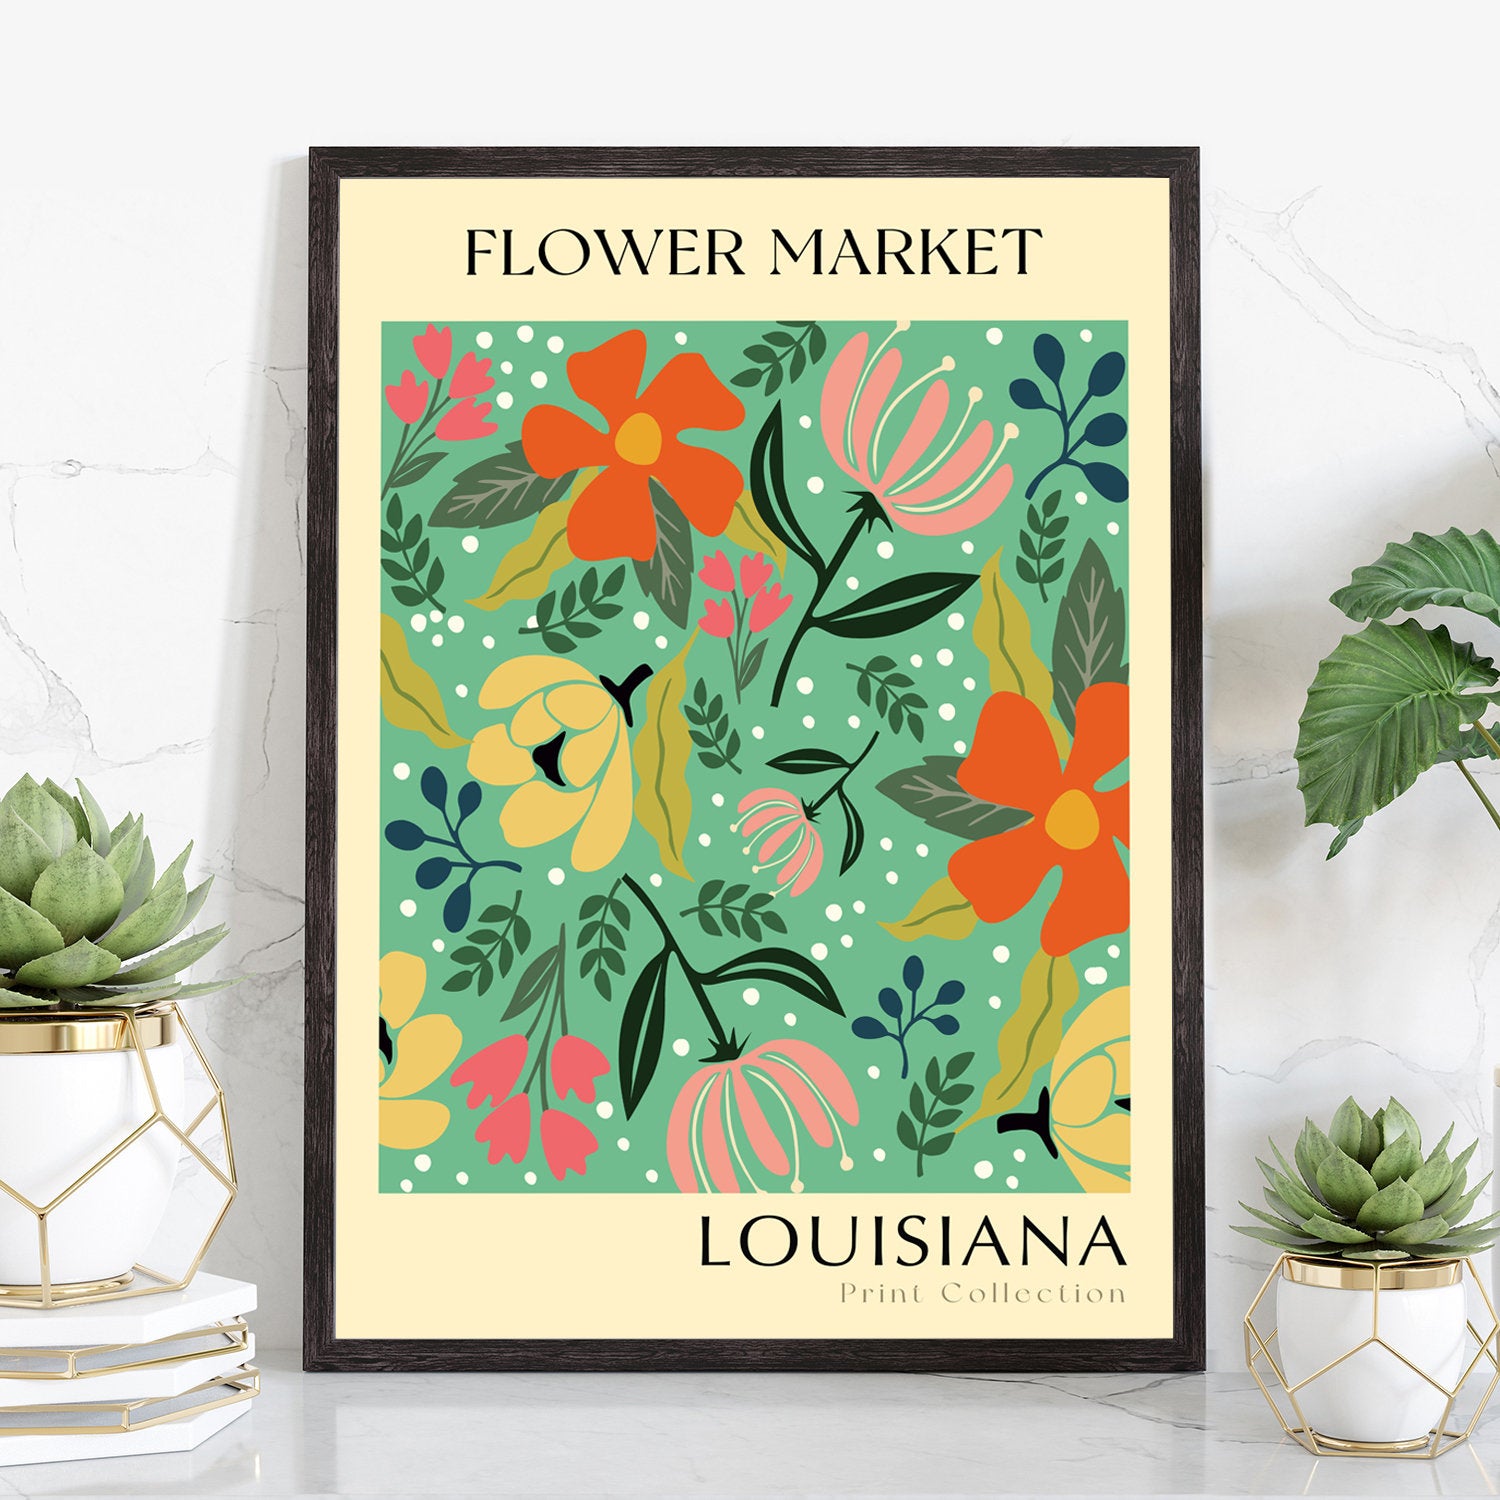 Louisiana State flower print, States poster, Louisiana flower market poster, Botanical posters, Nature poster artwork, Boho floral wall art